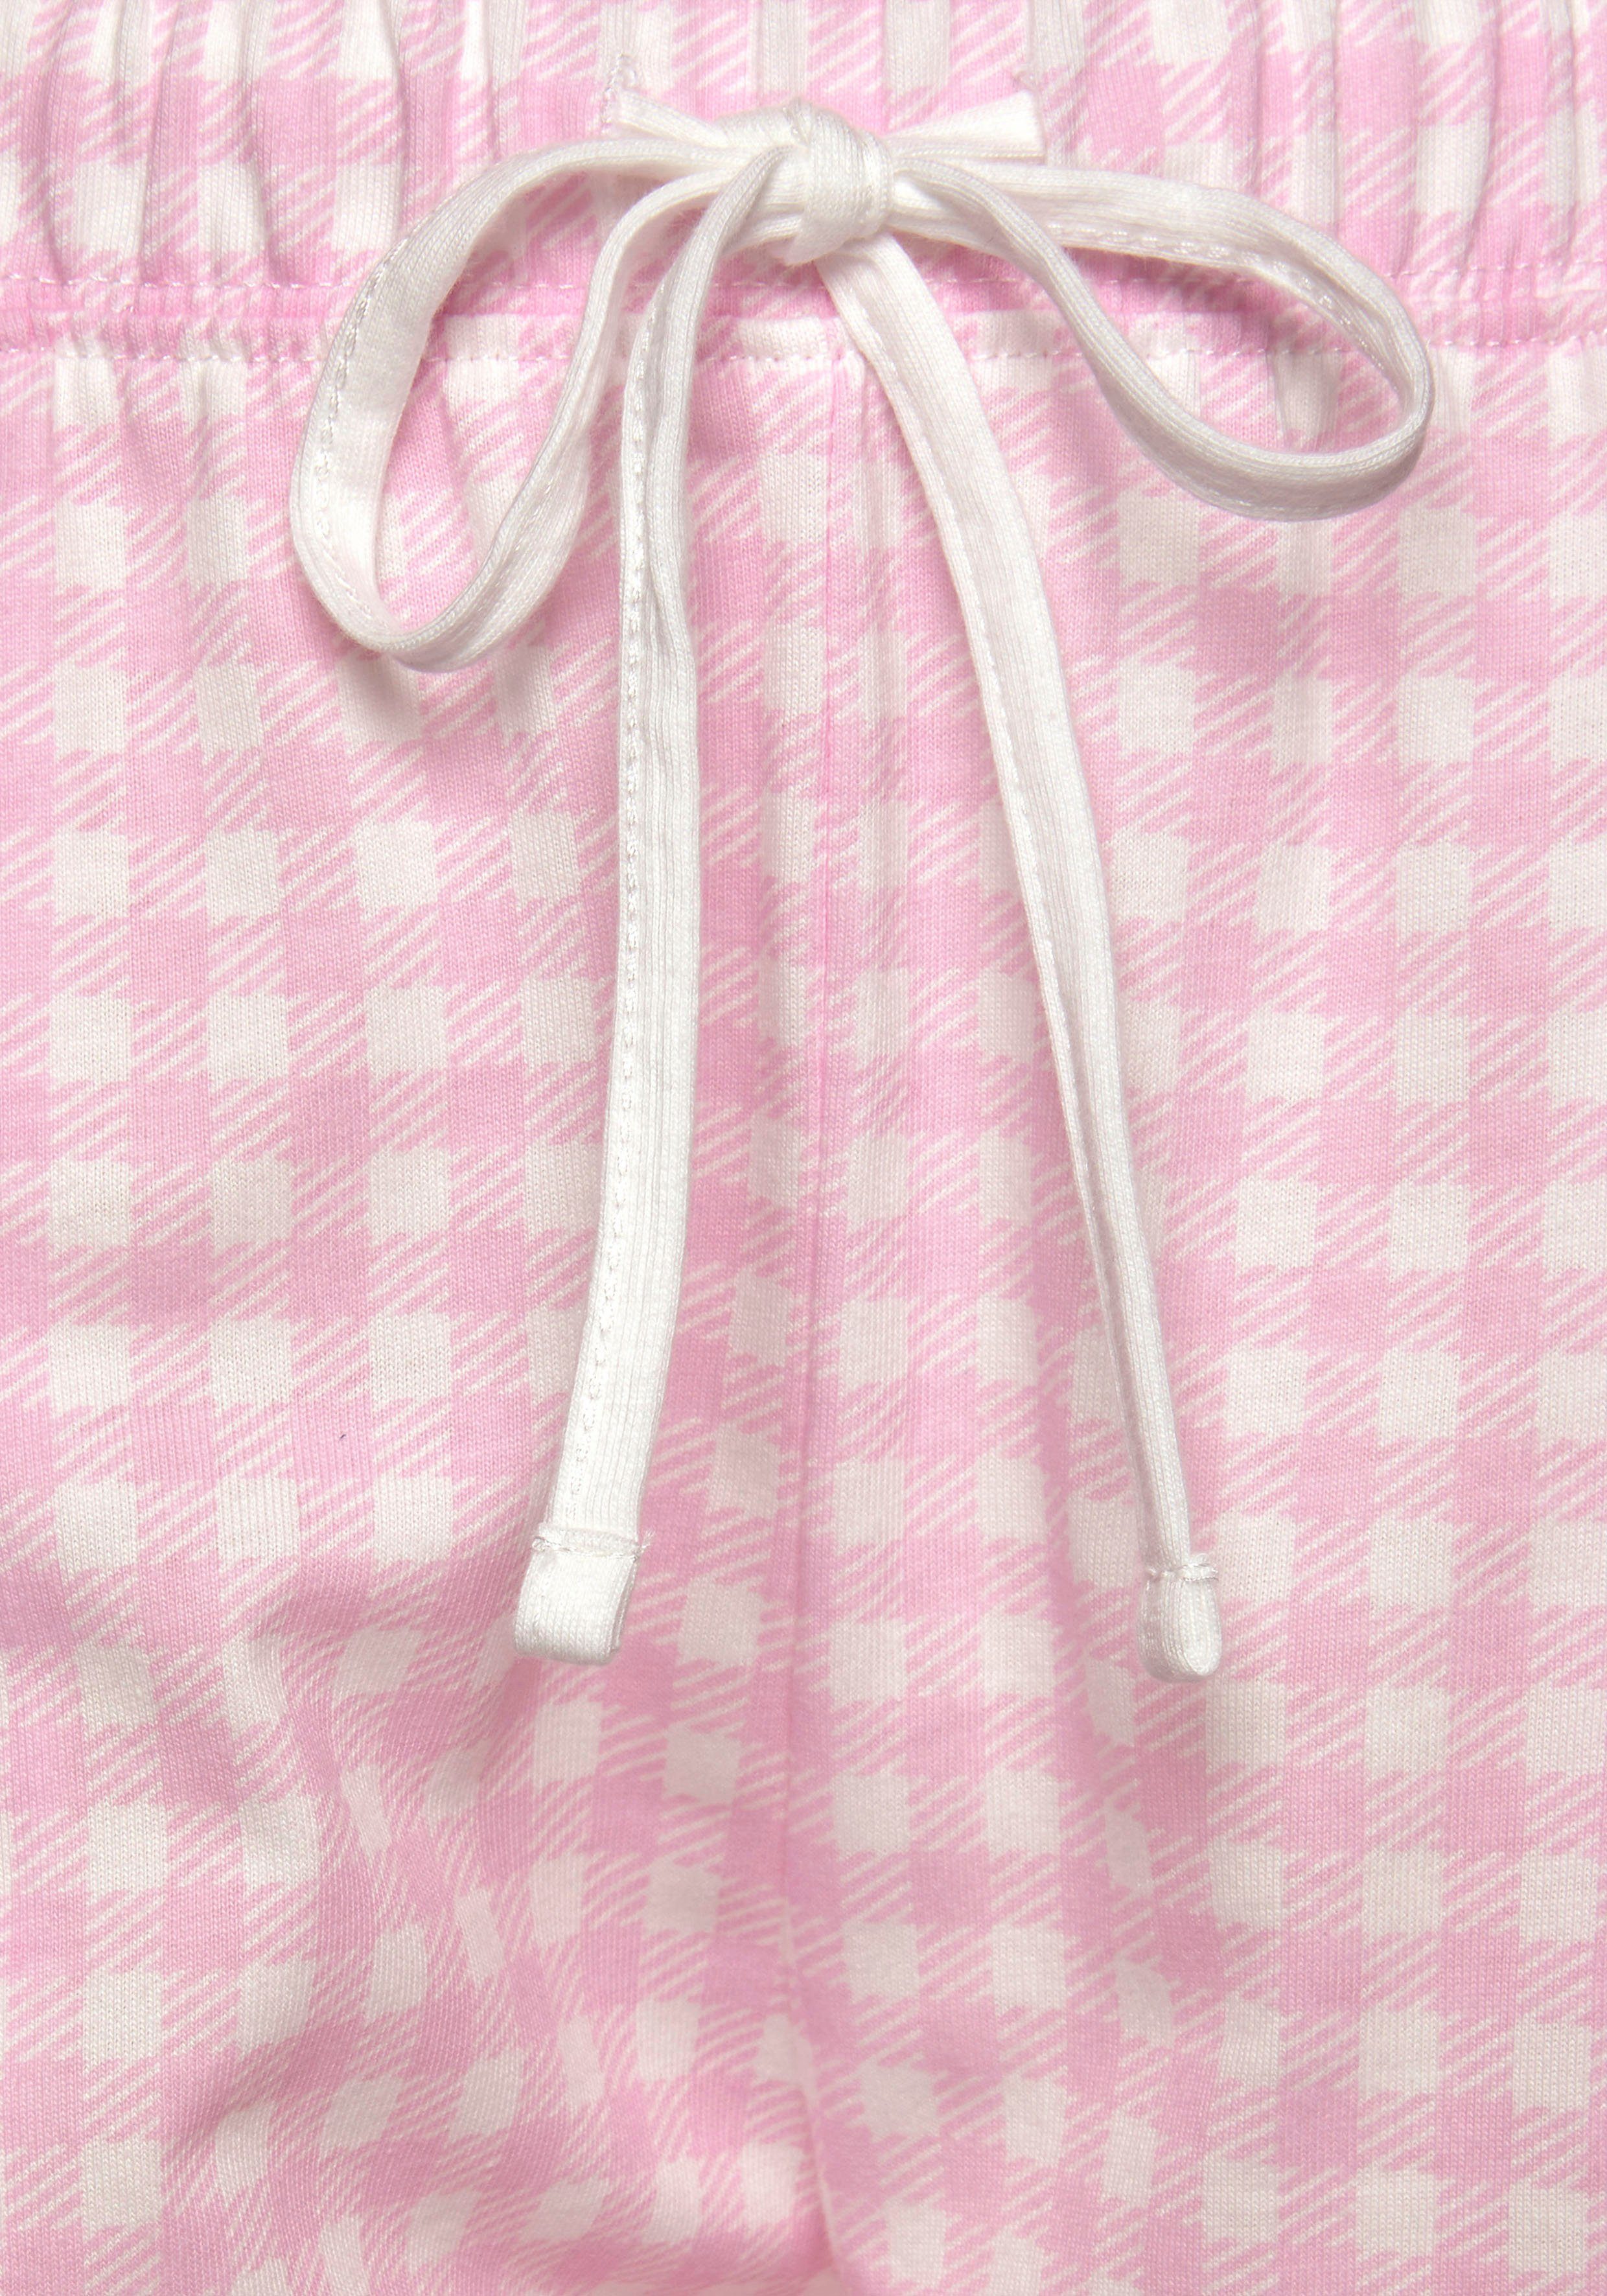 (2 s.Oliver 1 Stück) Pyjama tlg., rosa-kariert